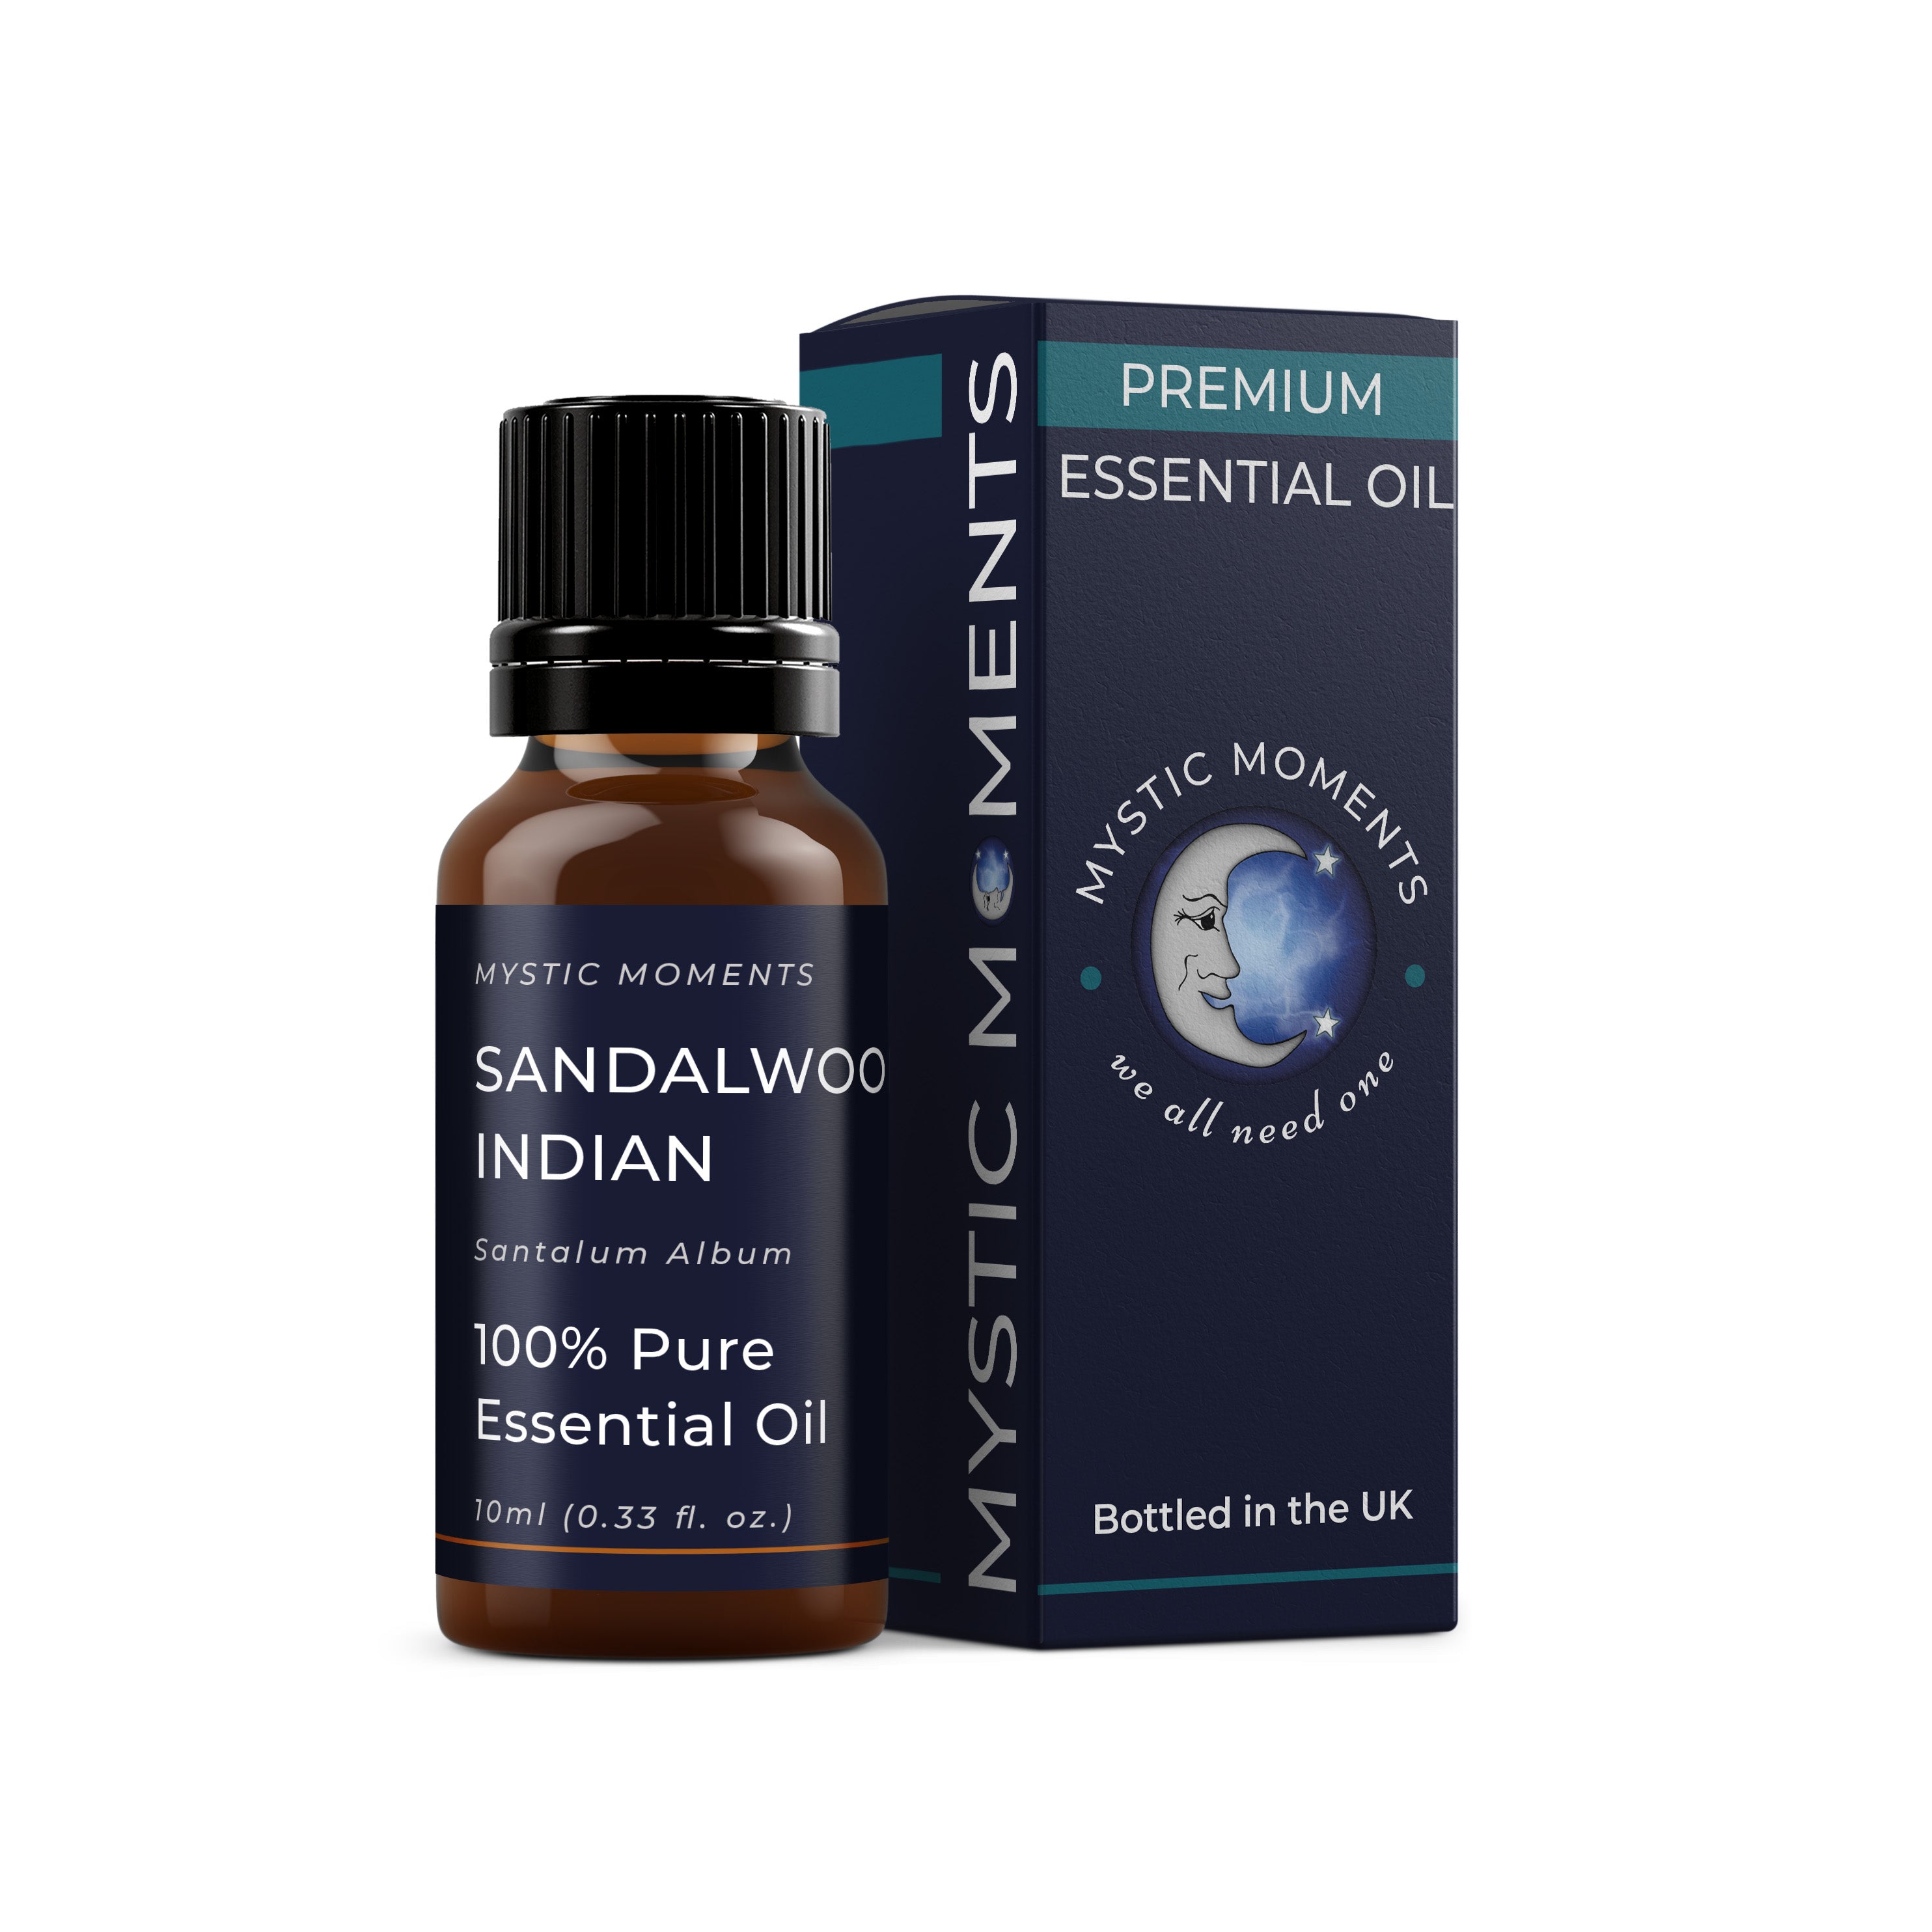 Sandalwood Indian Essential Oil